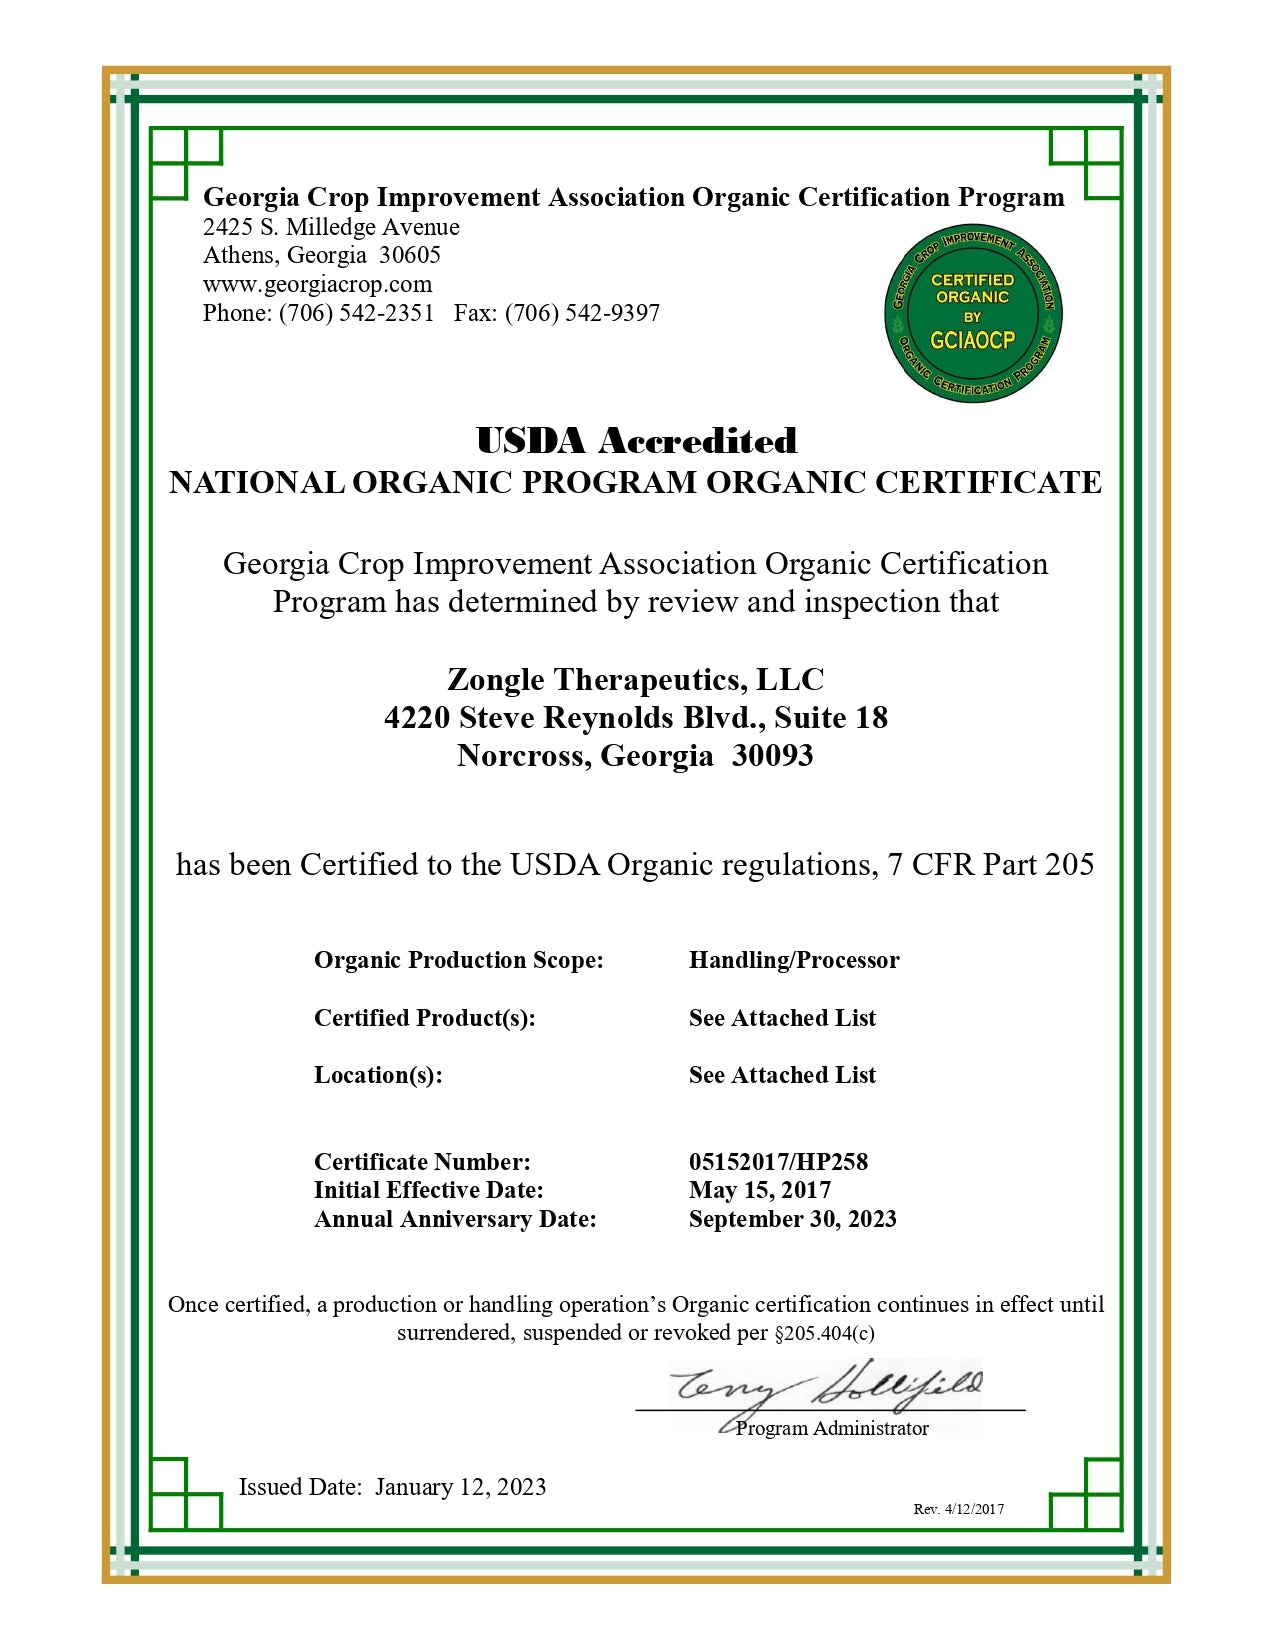 USDA Accredited-National Organic Program Organic Certificate-Zongle Therapeutics